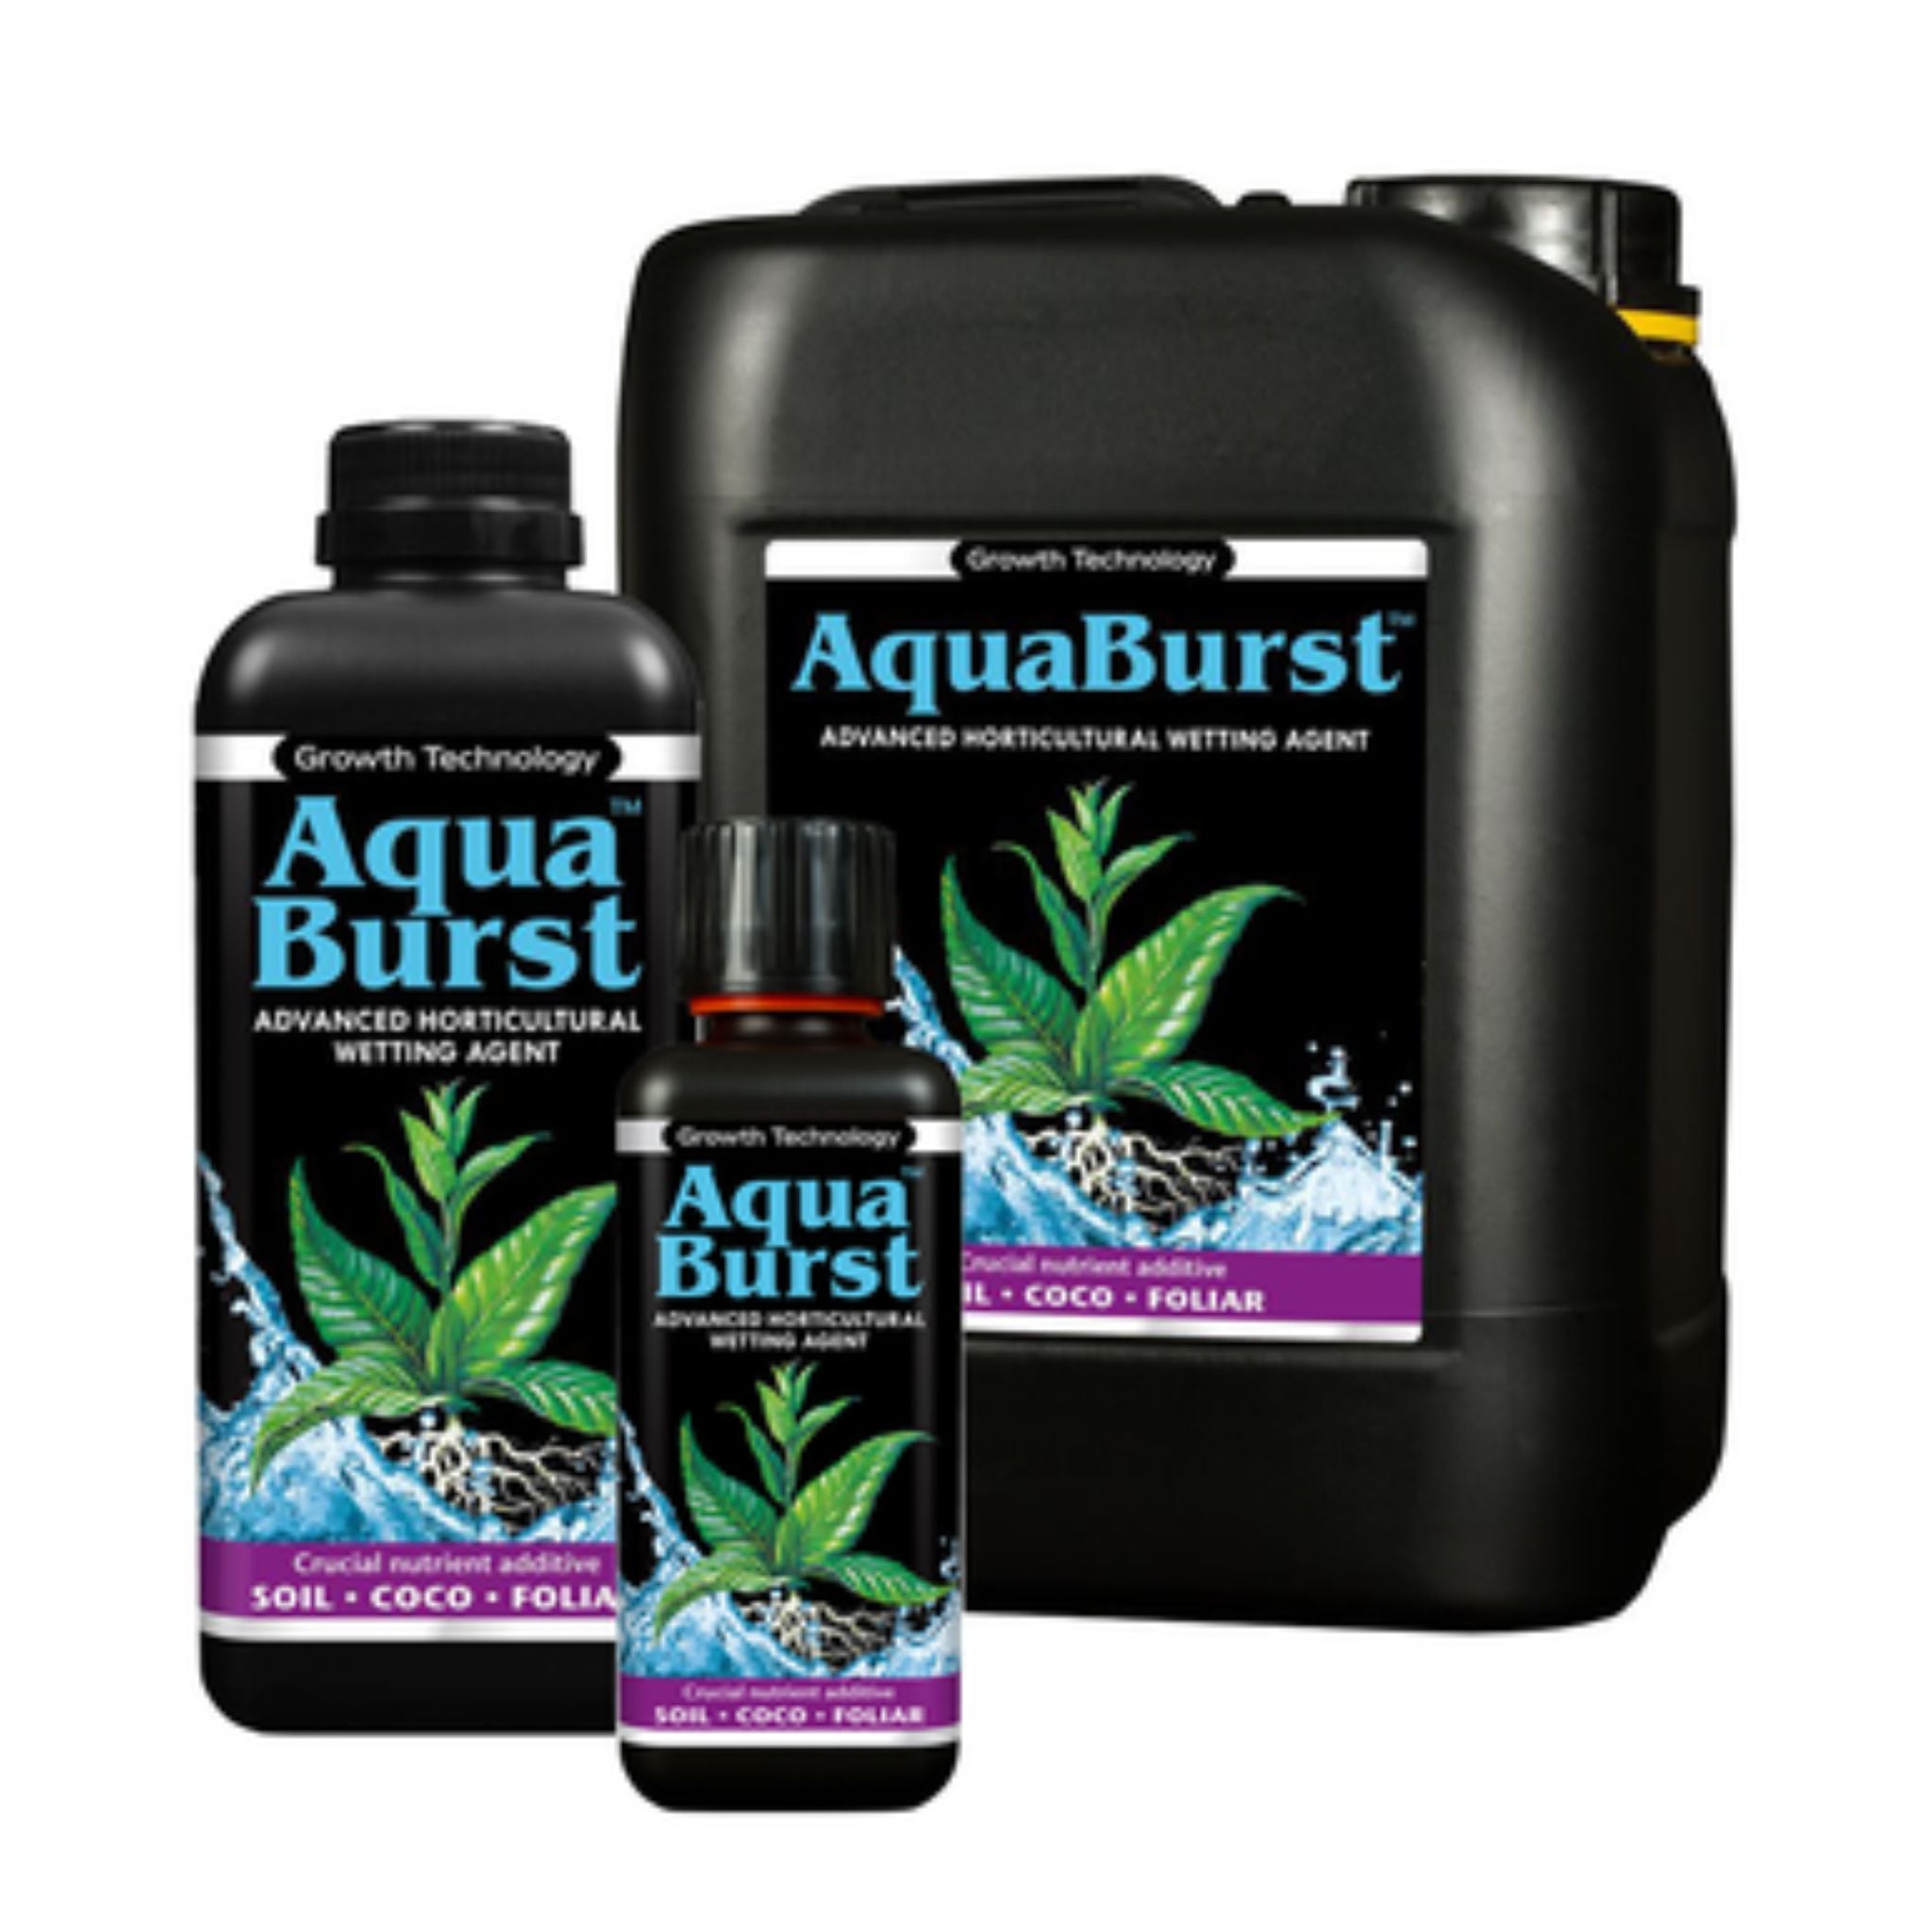 Growth Technology Aqua Burst